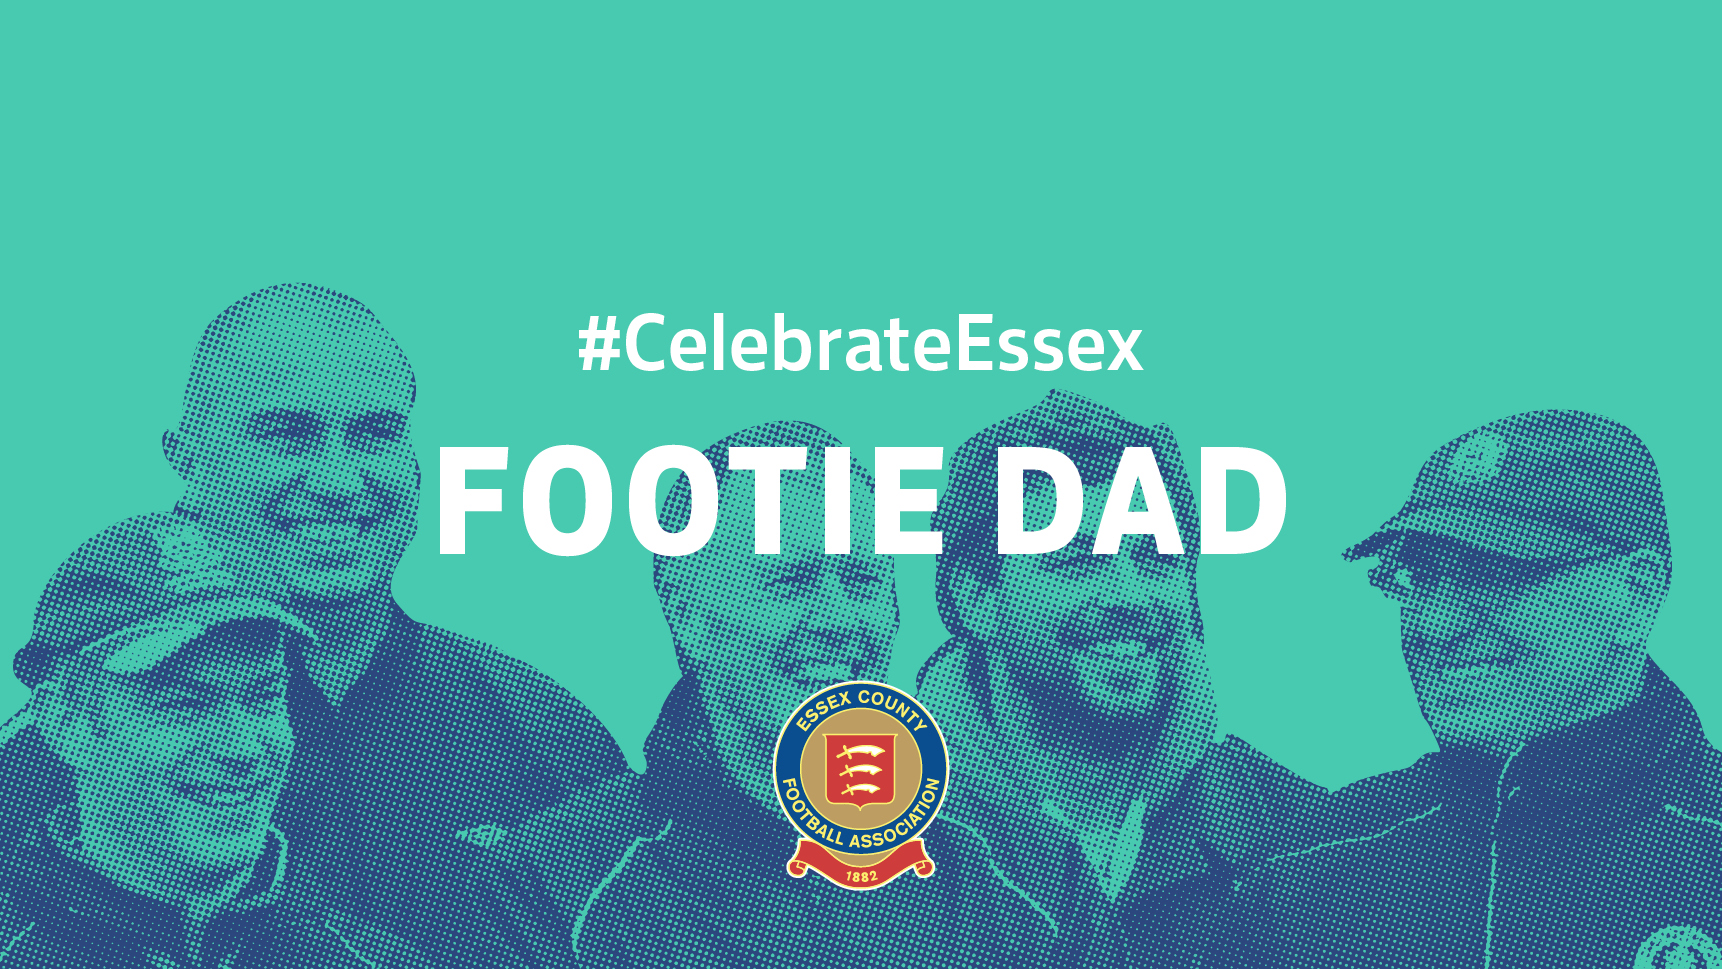 #CelebrateEssex Footie Dad Winner